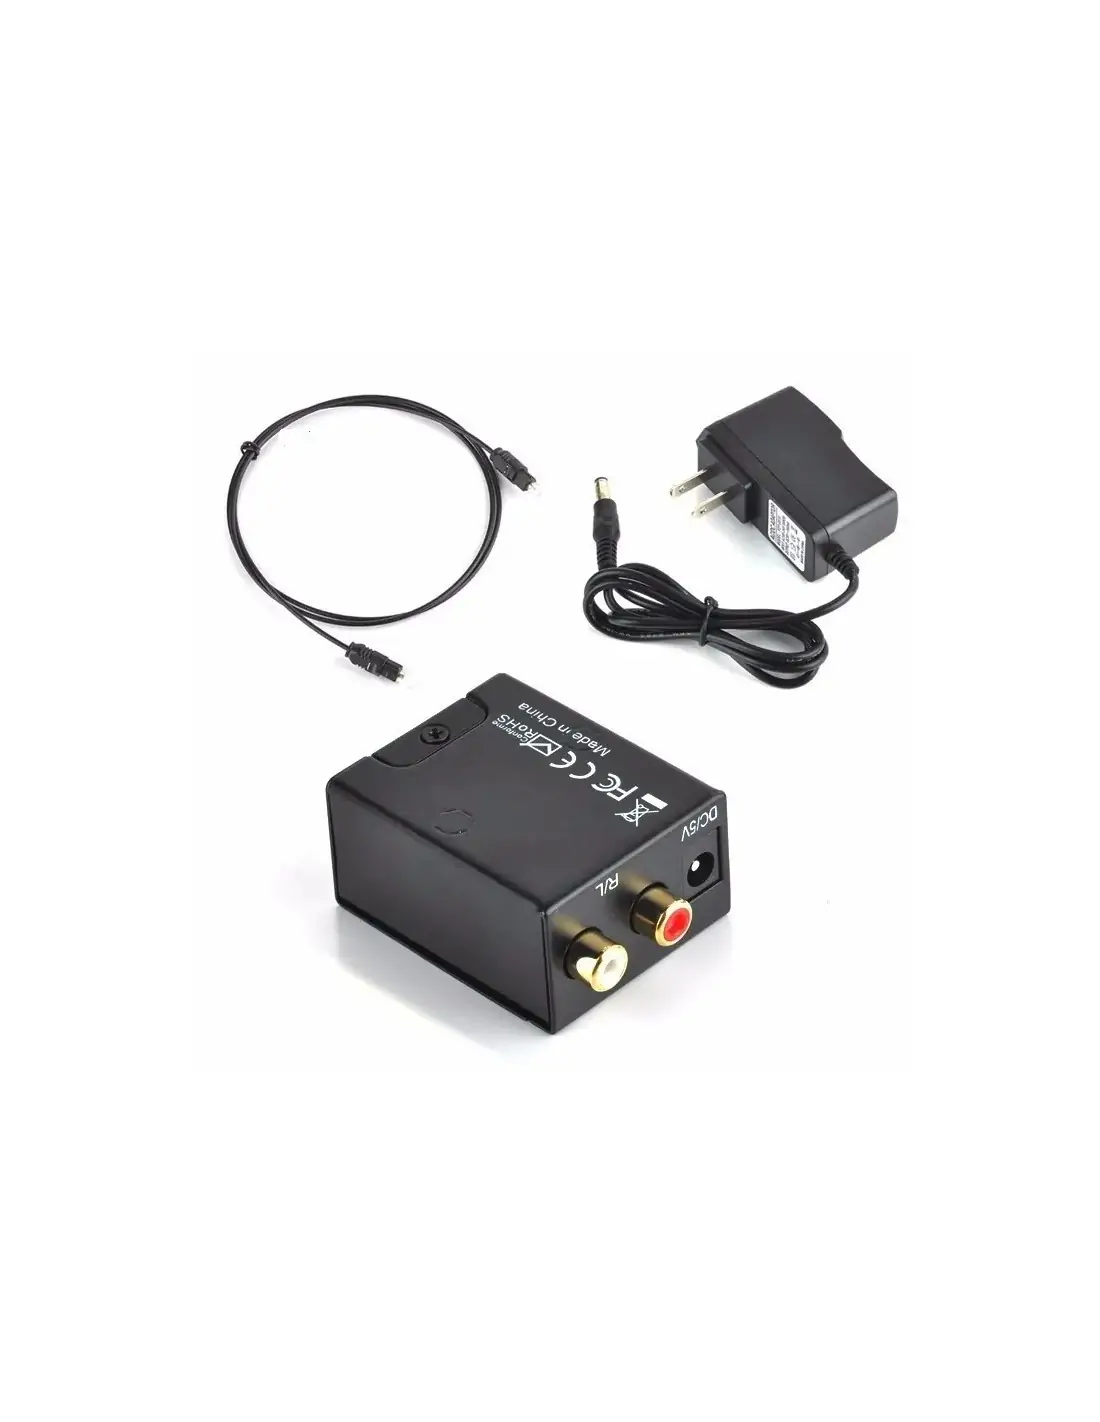 Compre Amplificador de Audio de 5.1 Canal Digital a Analógico SPDIF Coaxial  a RCA DTS AC3 Amplificador Digital Óptico Converter Analógico Para TV en  China